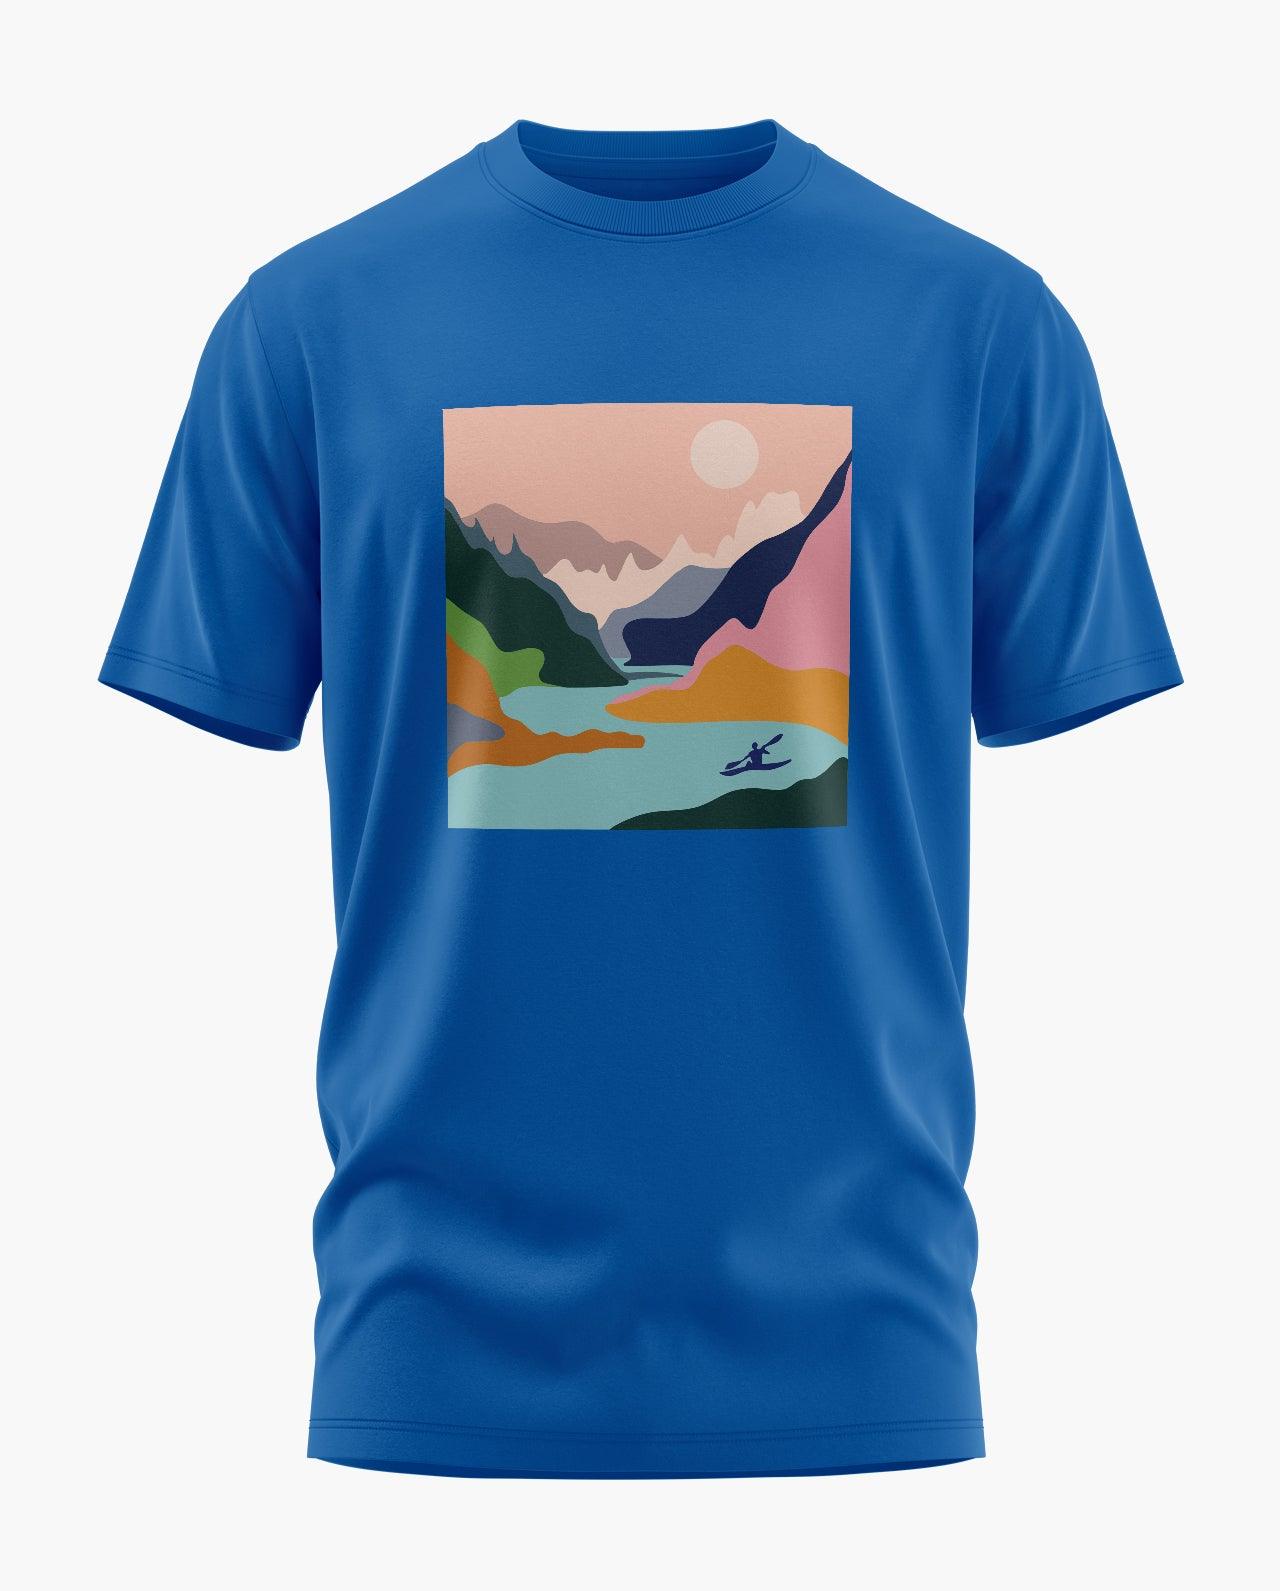 Kayak Graphic T-Shirt exclusive at Aero Armour